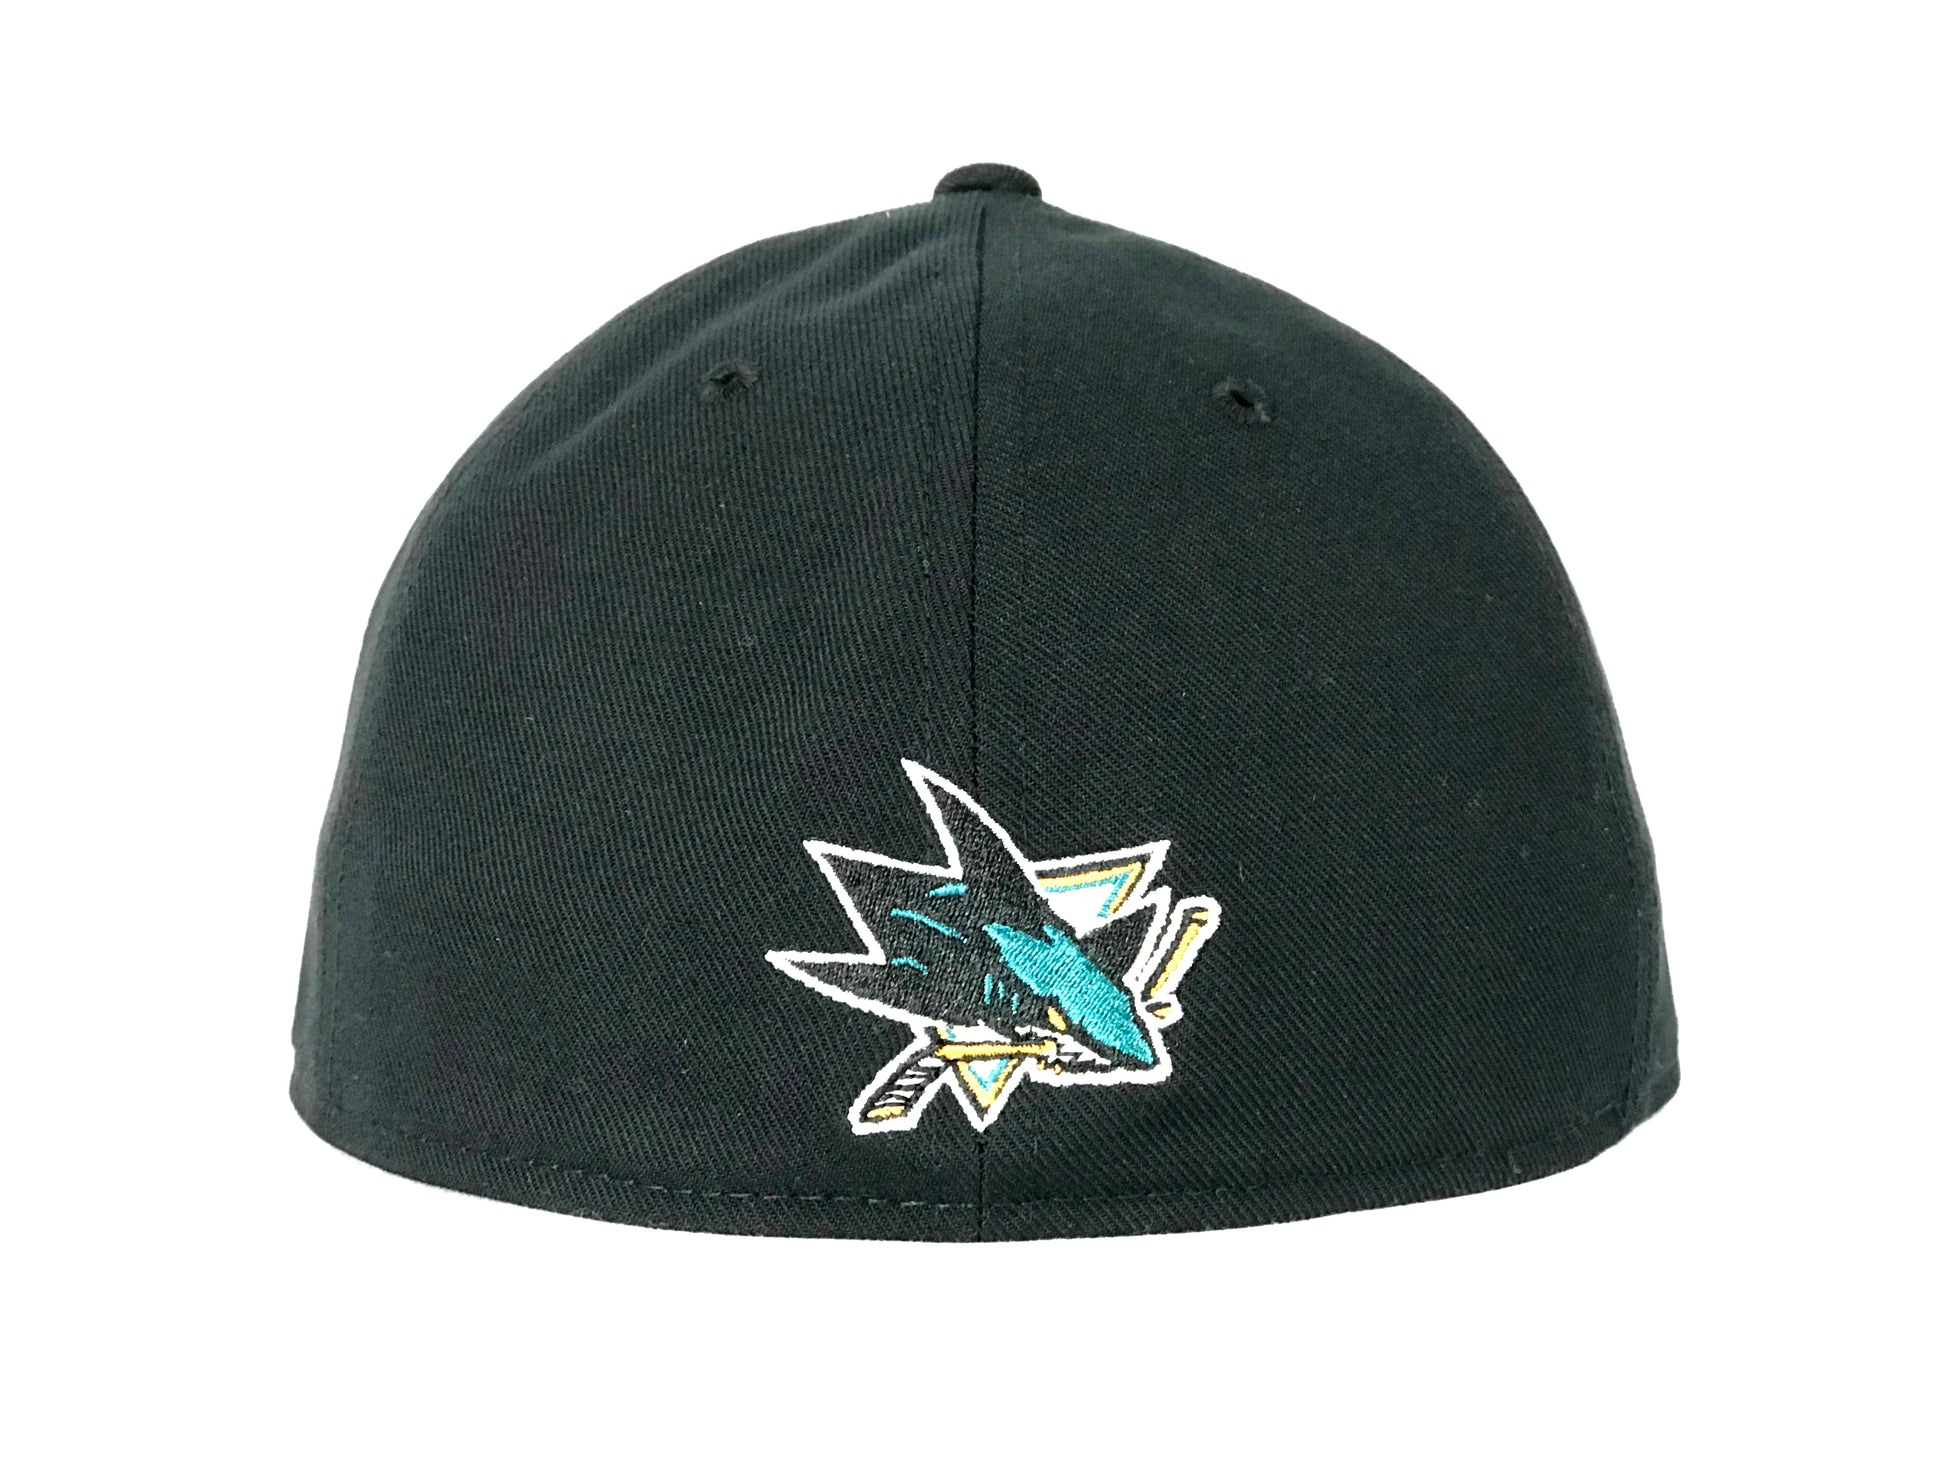 Reebok San Jose Sharks Hat size s/m